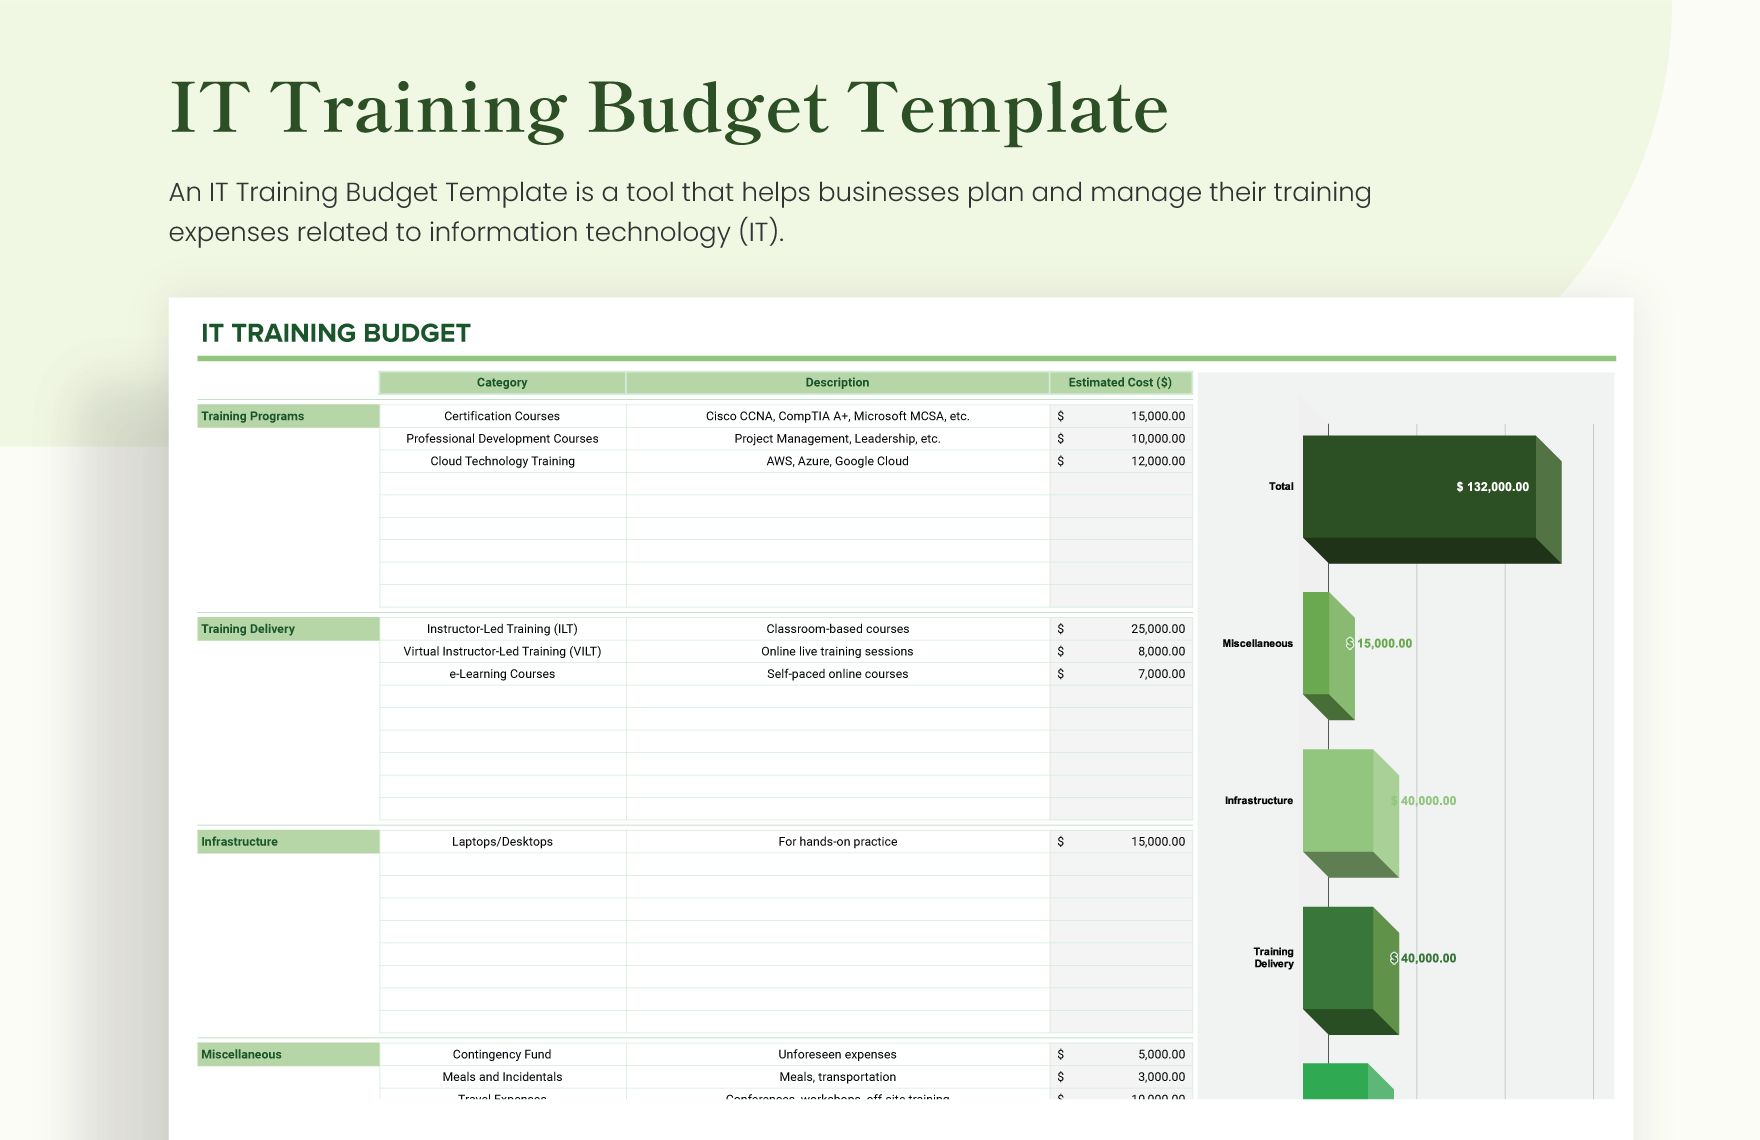 IT Training Budget Template